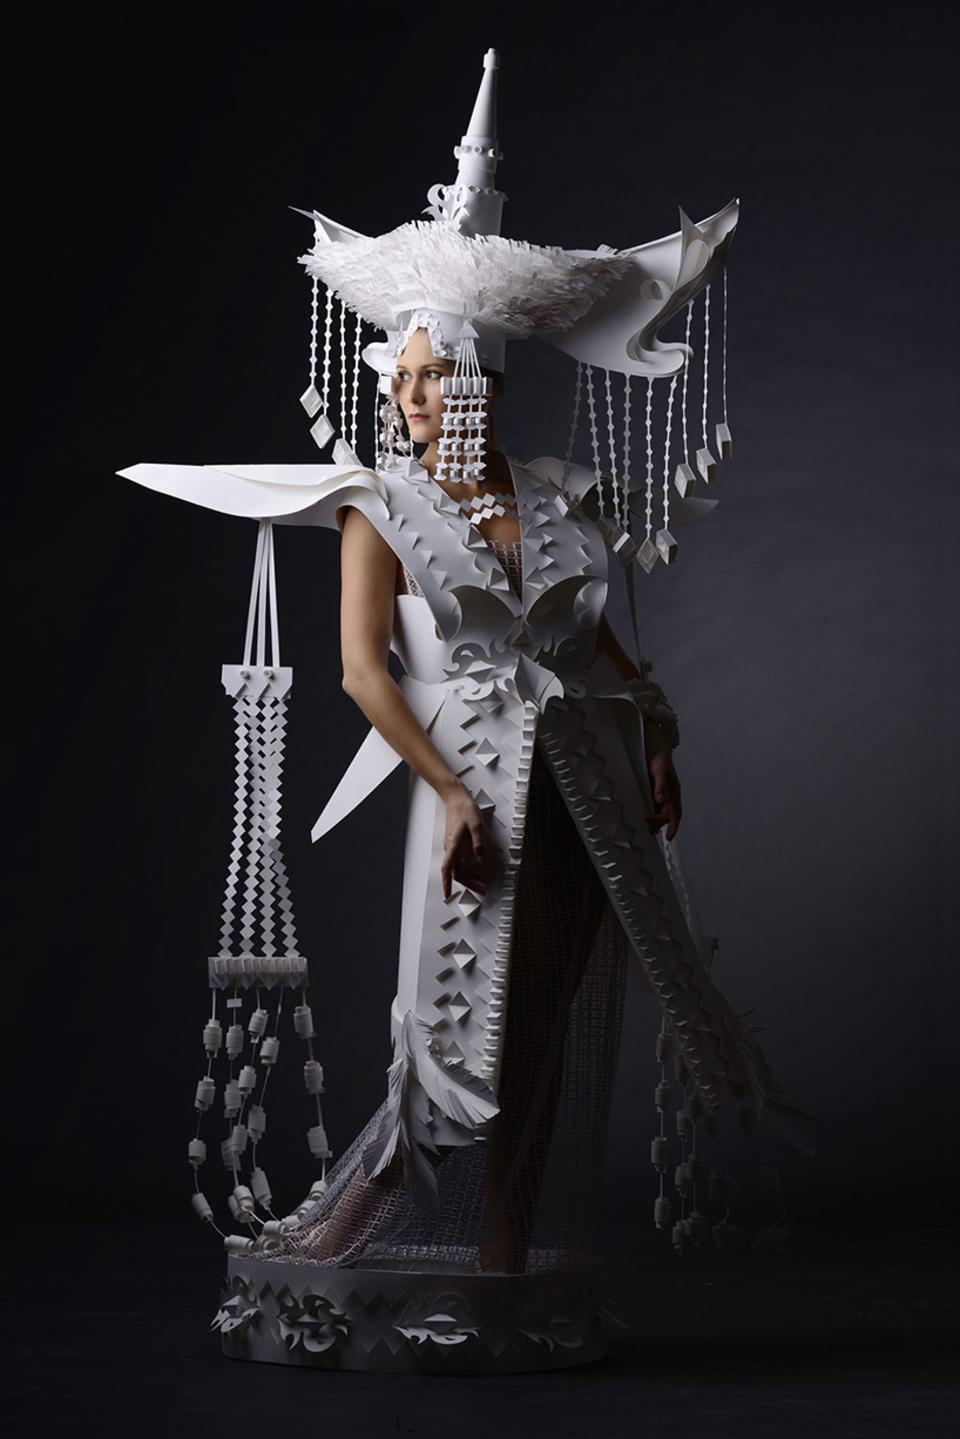 The Fashionable Paper Sculptures of Asya Kozina - Art - Design ...